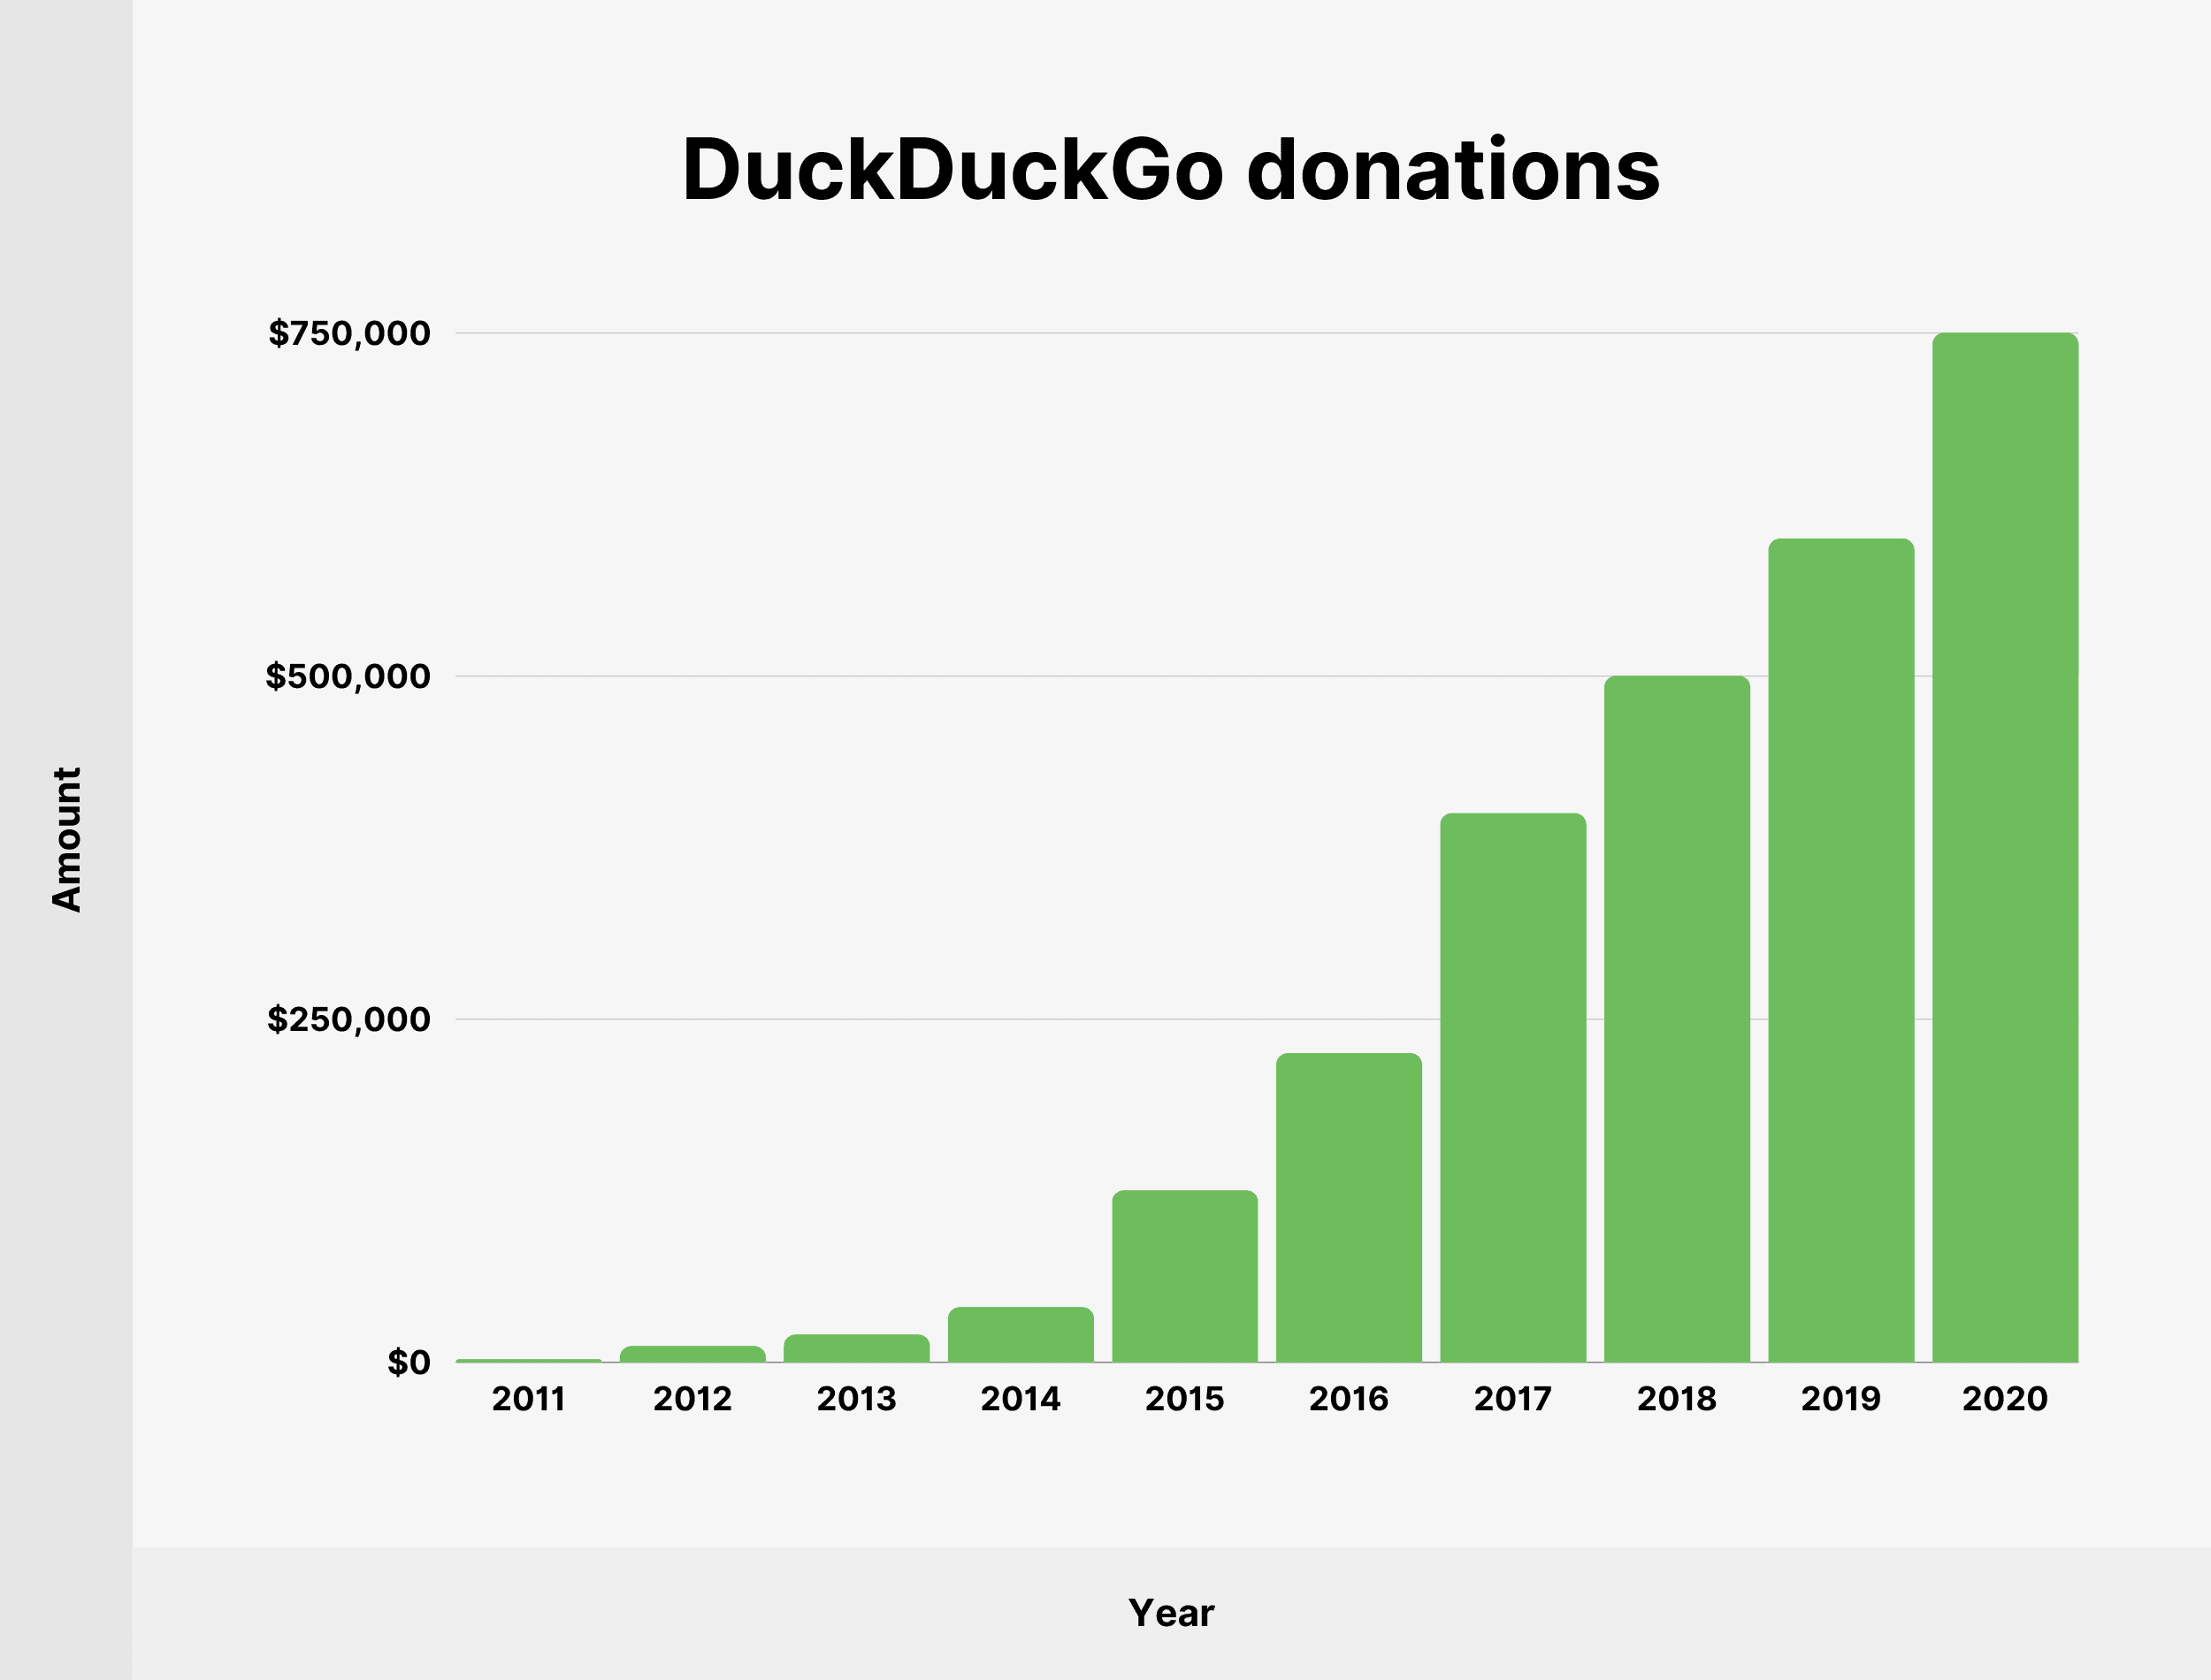 DuckDuckGo donations